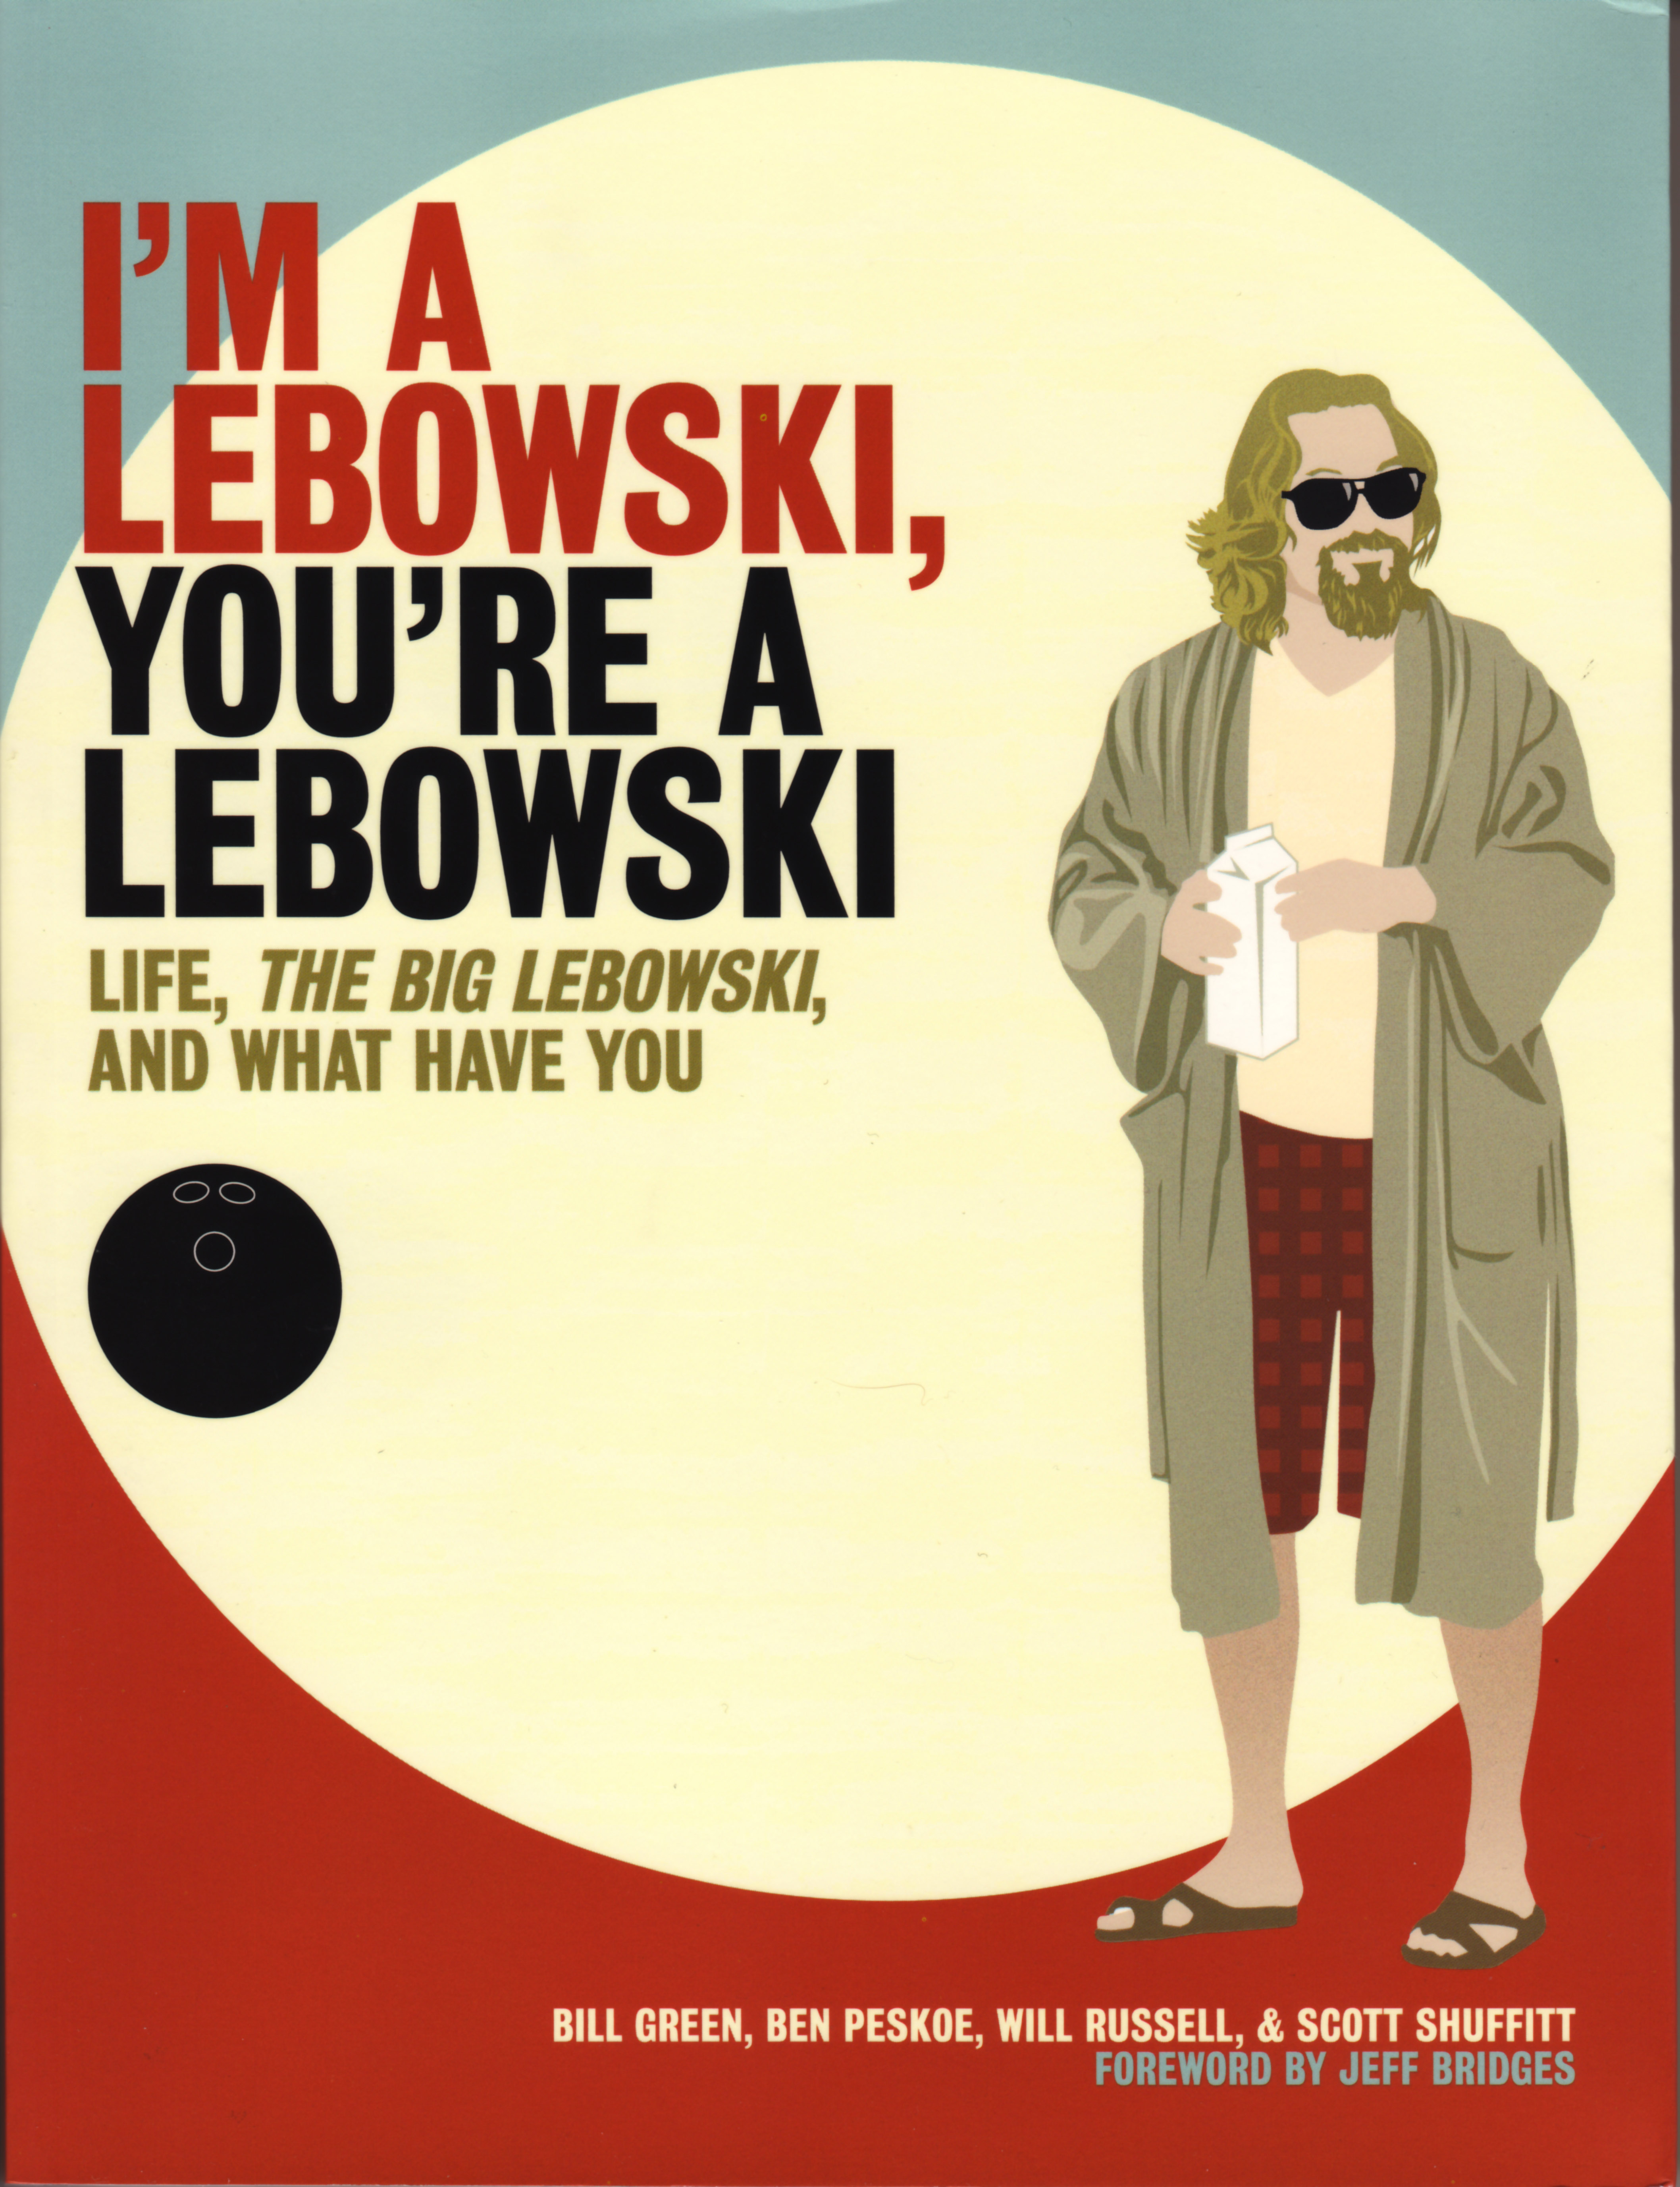 The Dude, The Big Lebowski, movie posters - desktop wallpaper